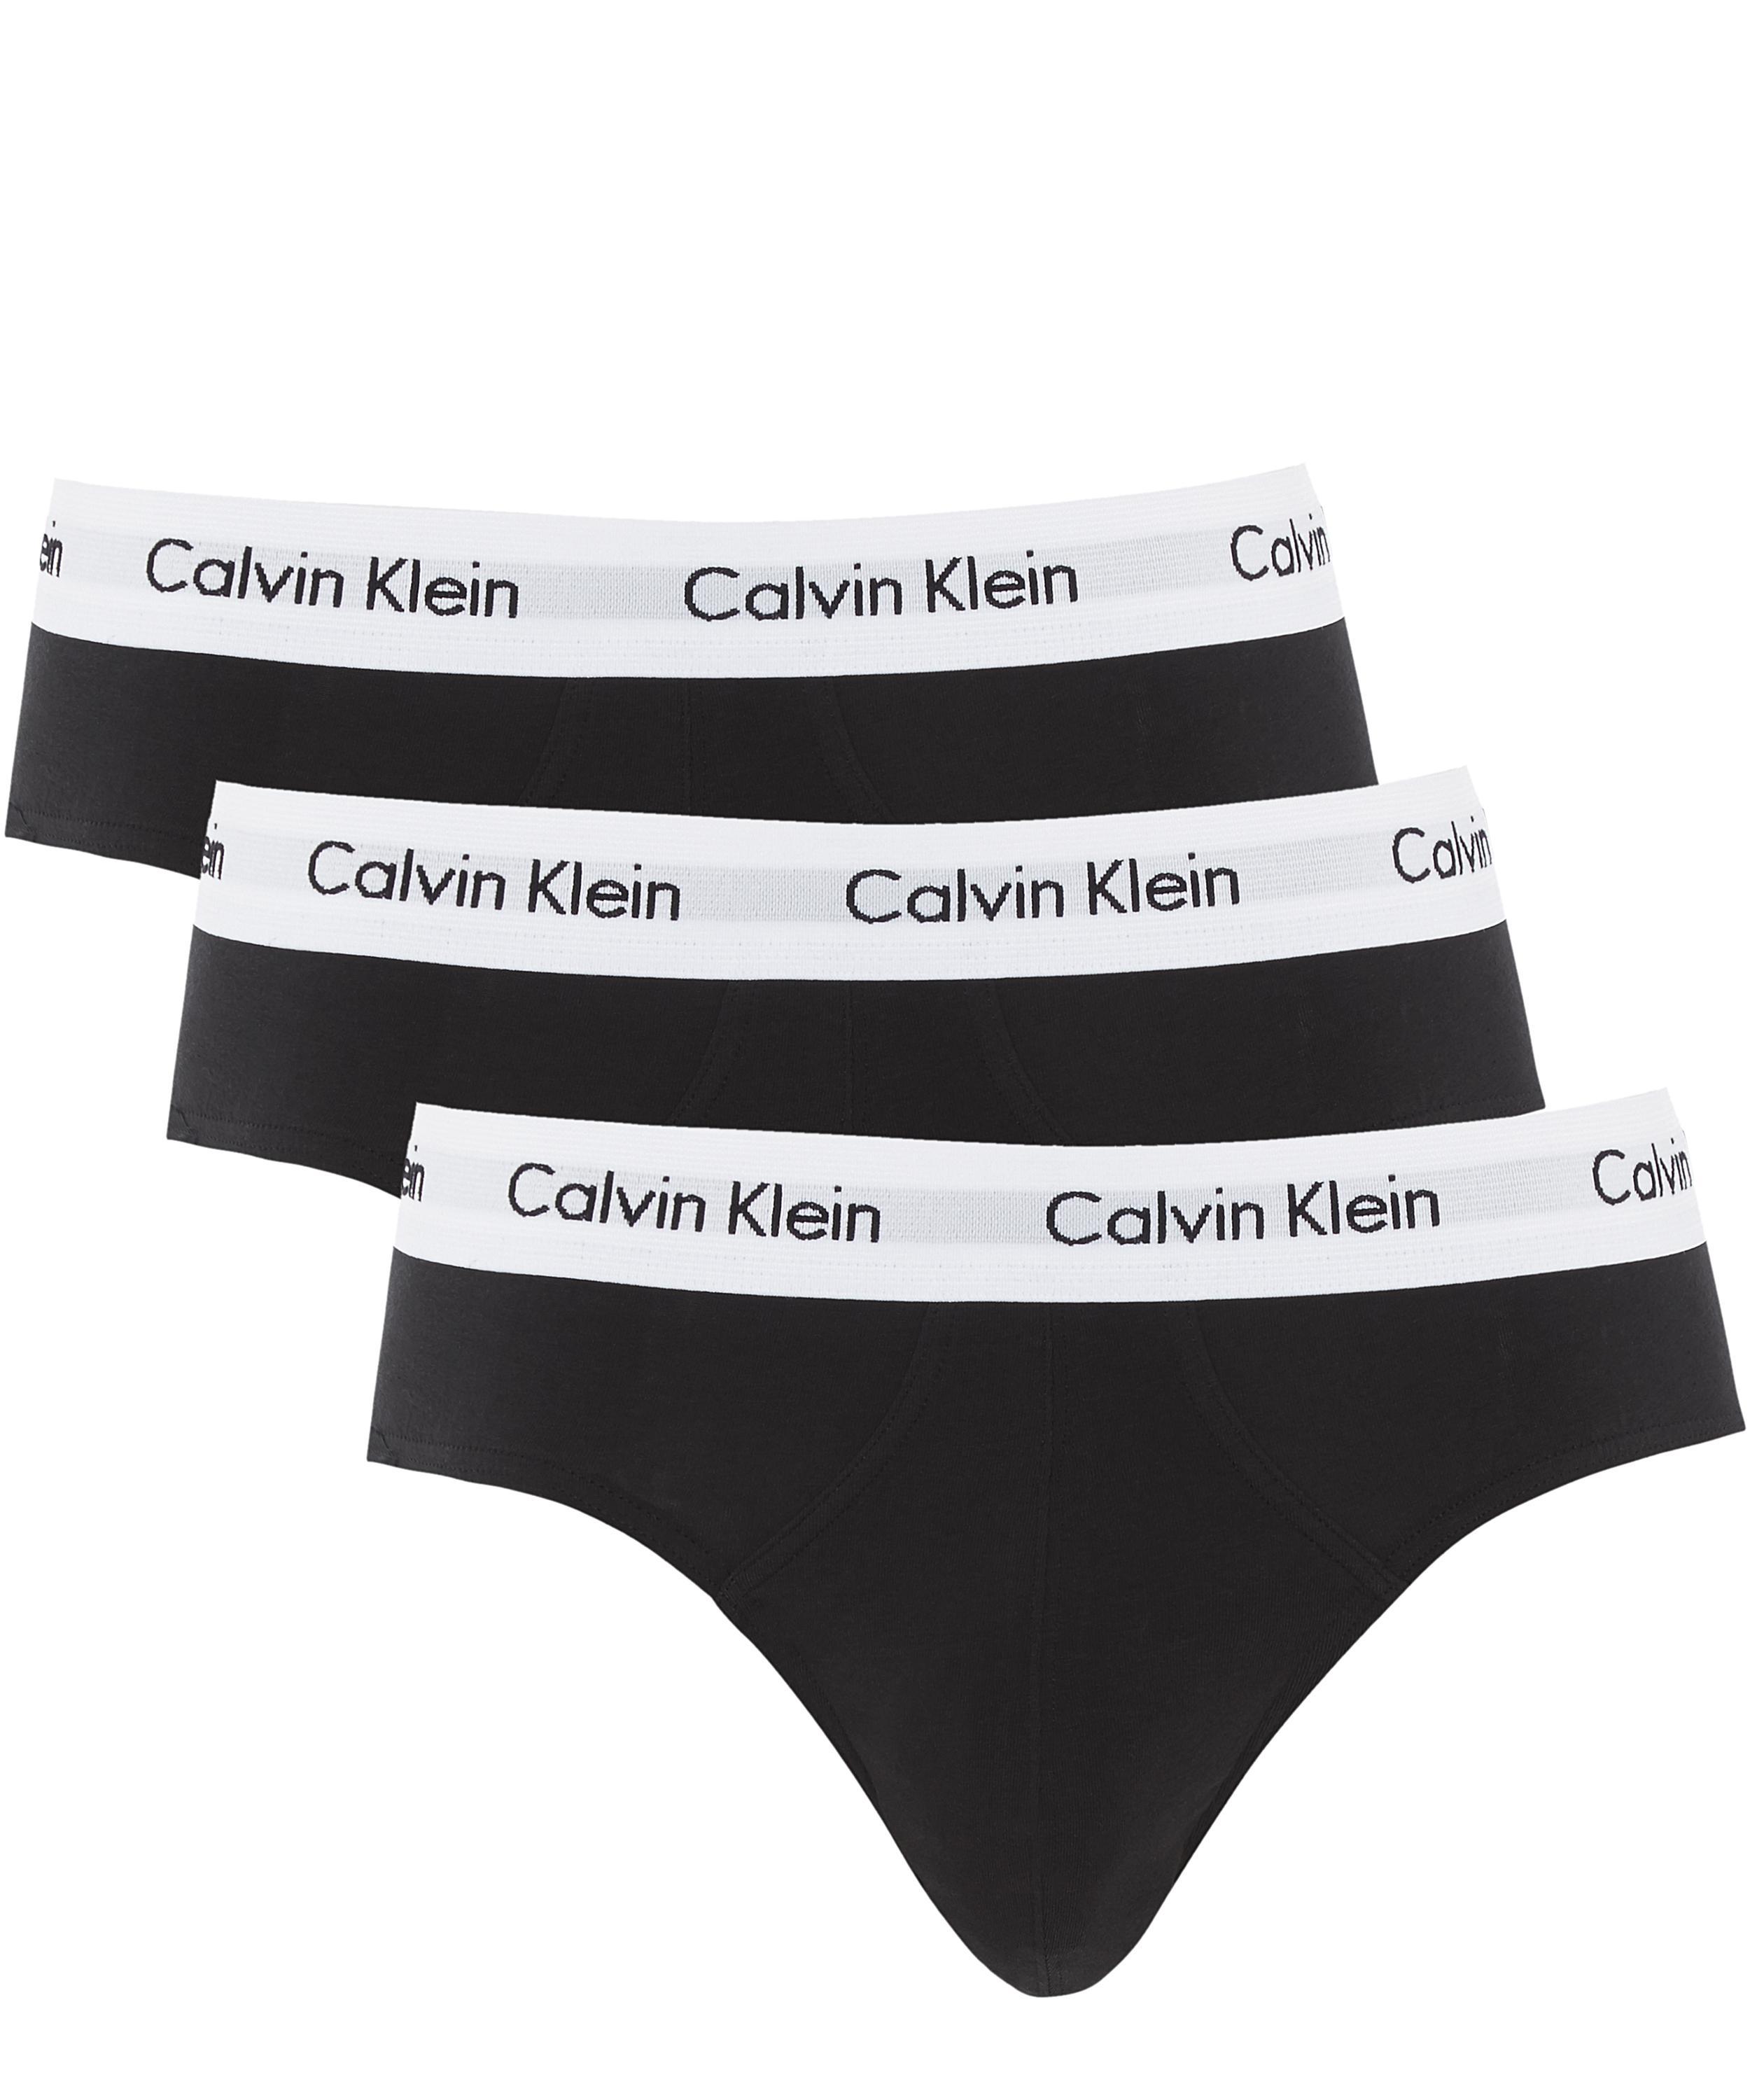 Calvin Klein Cotton Pack Of Three Hipster Briefs in Black for Men - Lyst